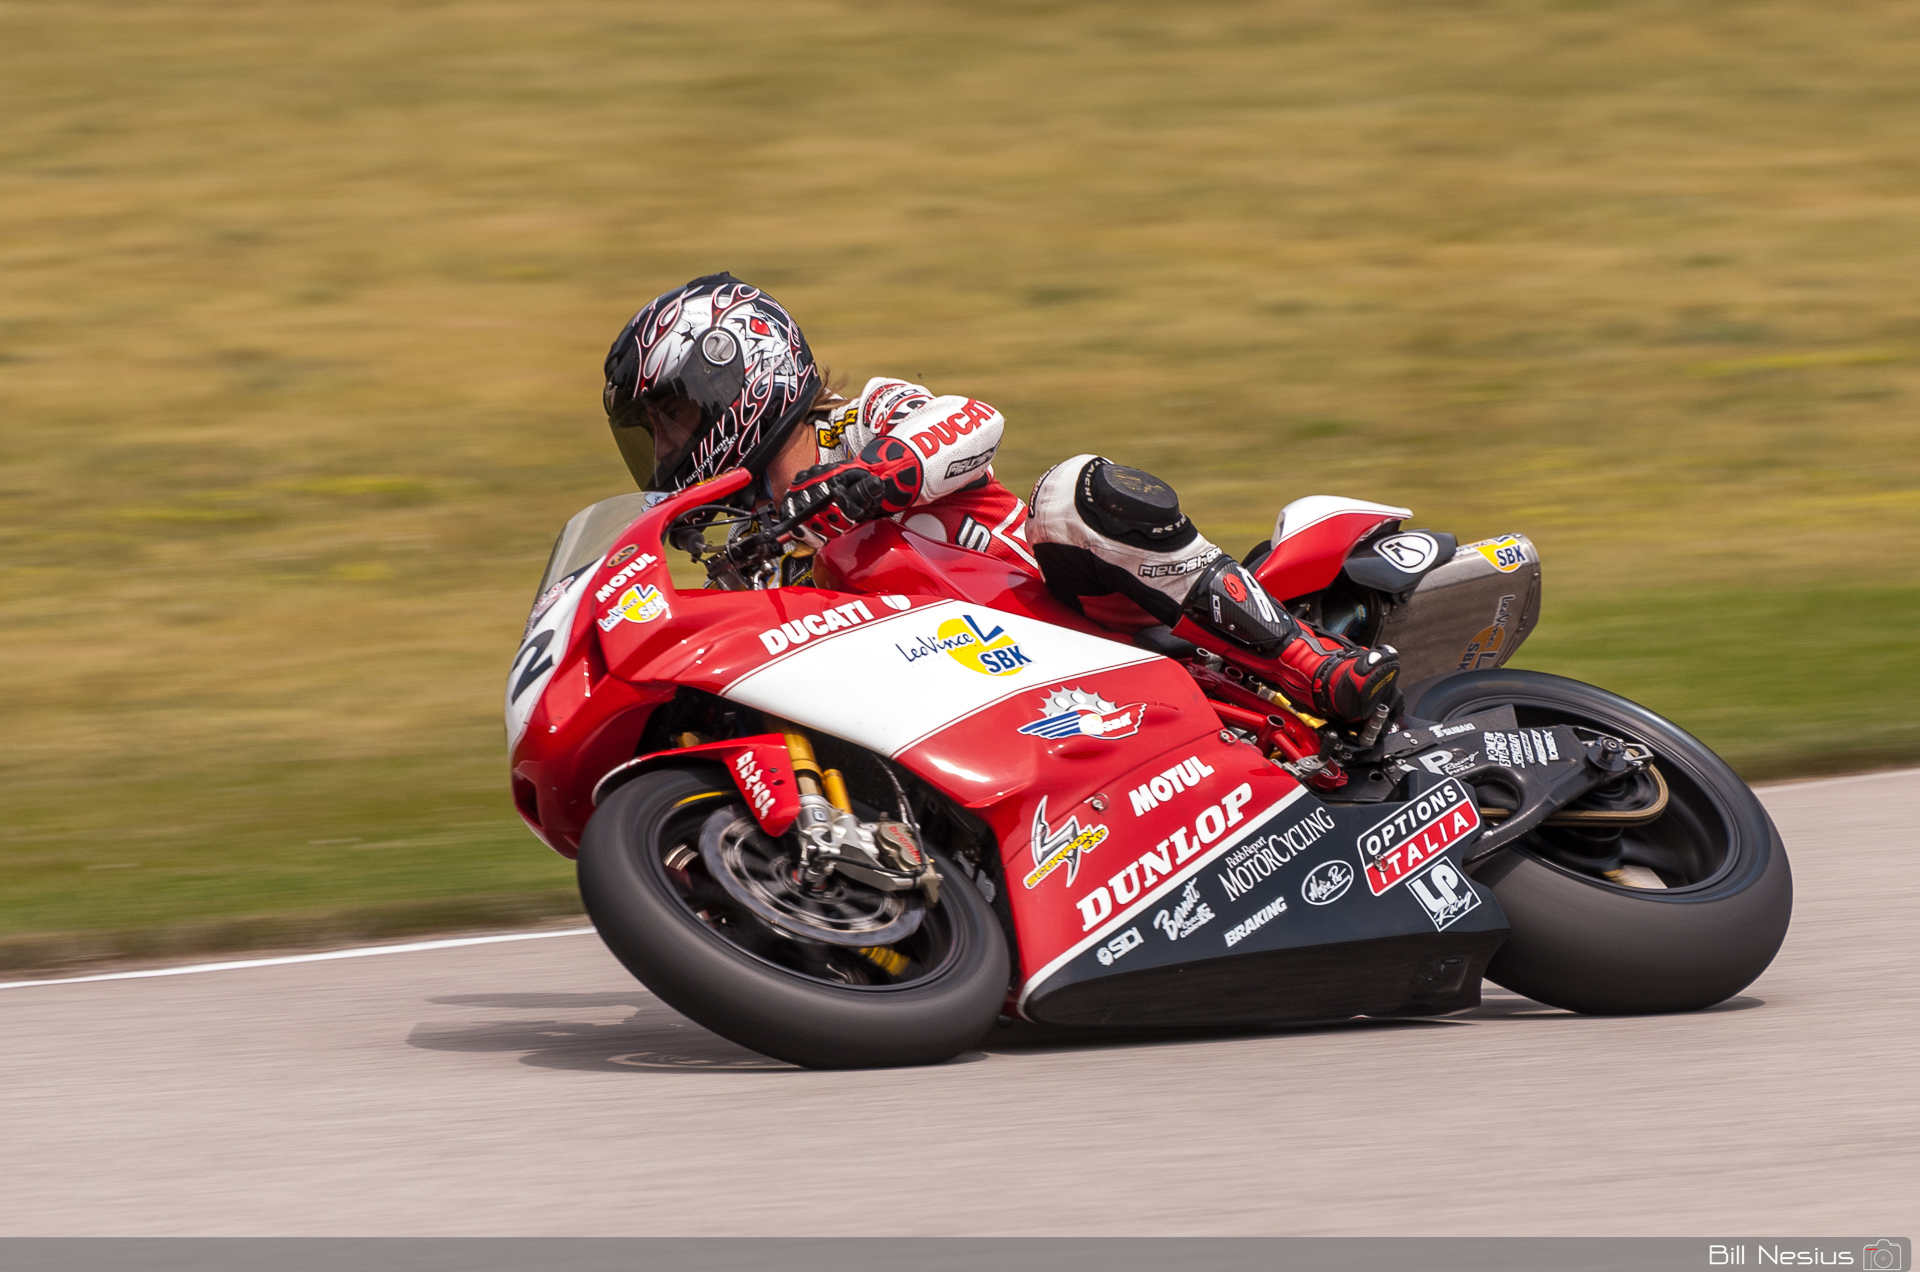 Larry Pegram on the Number 72 Leo Vince Ducati 749R / DSC_1411 / 3